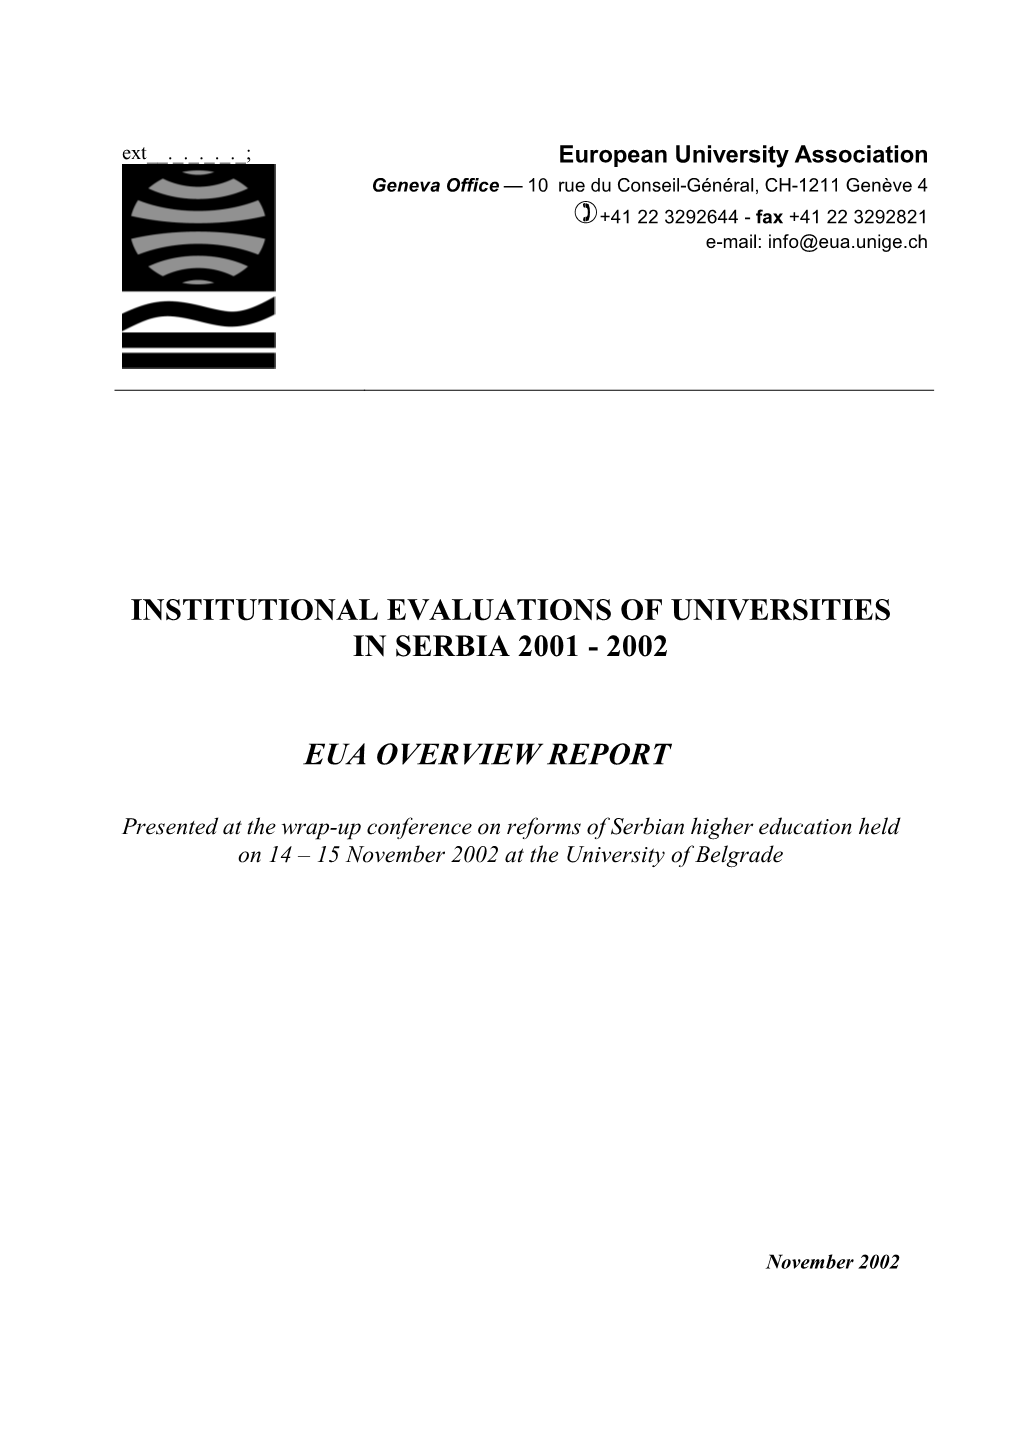 Institutional Evaluations of Universities in Serbia 2001 - 2002